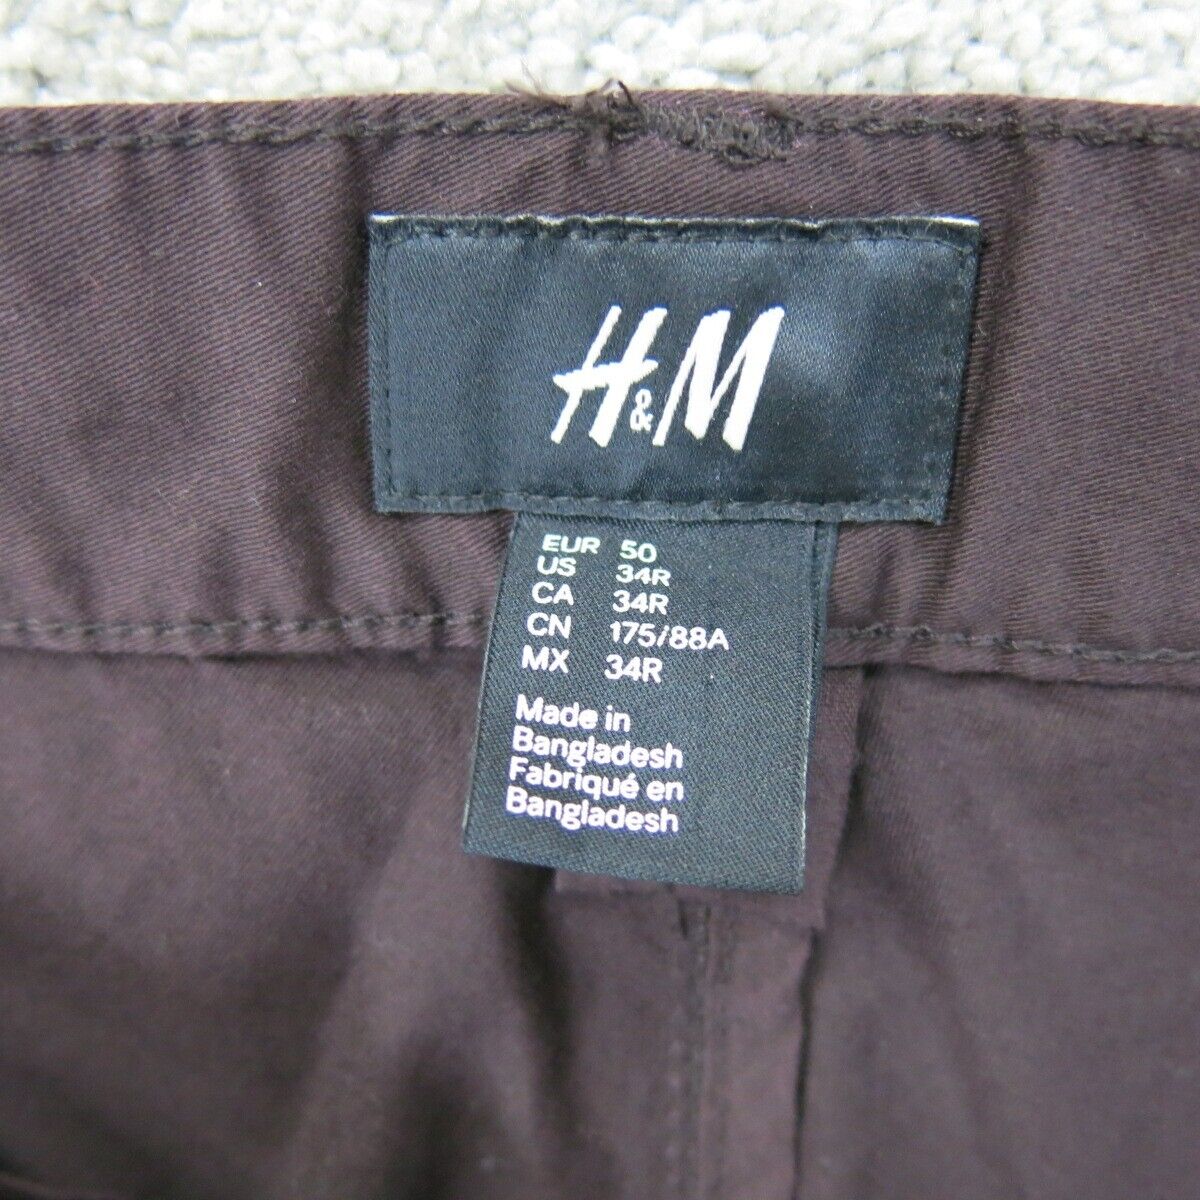 H&M Women Chino Pants Straight Leg Stretch High Rise Pockets Brown Size 34 Reg